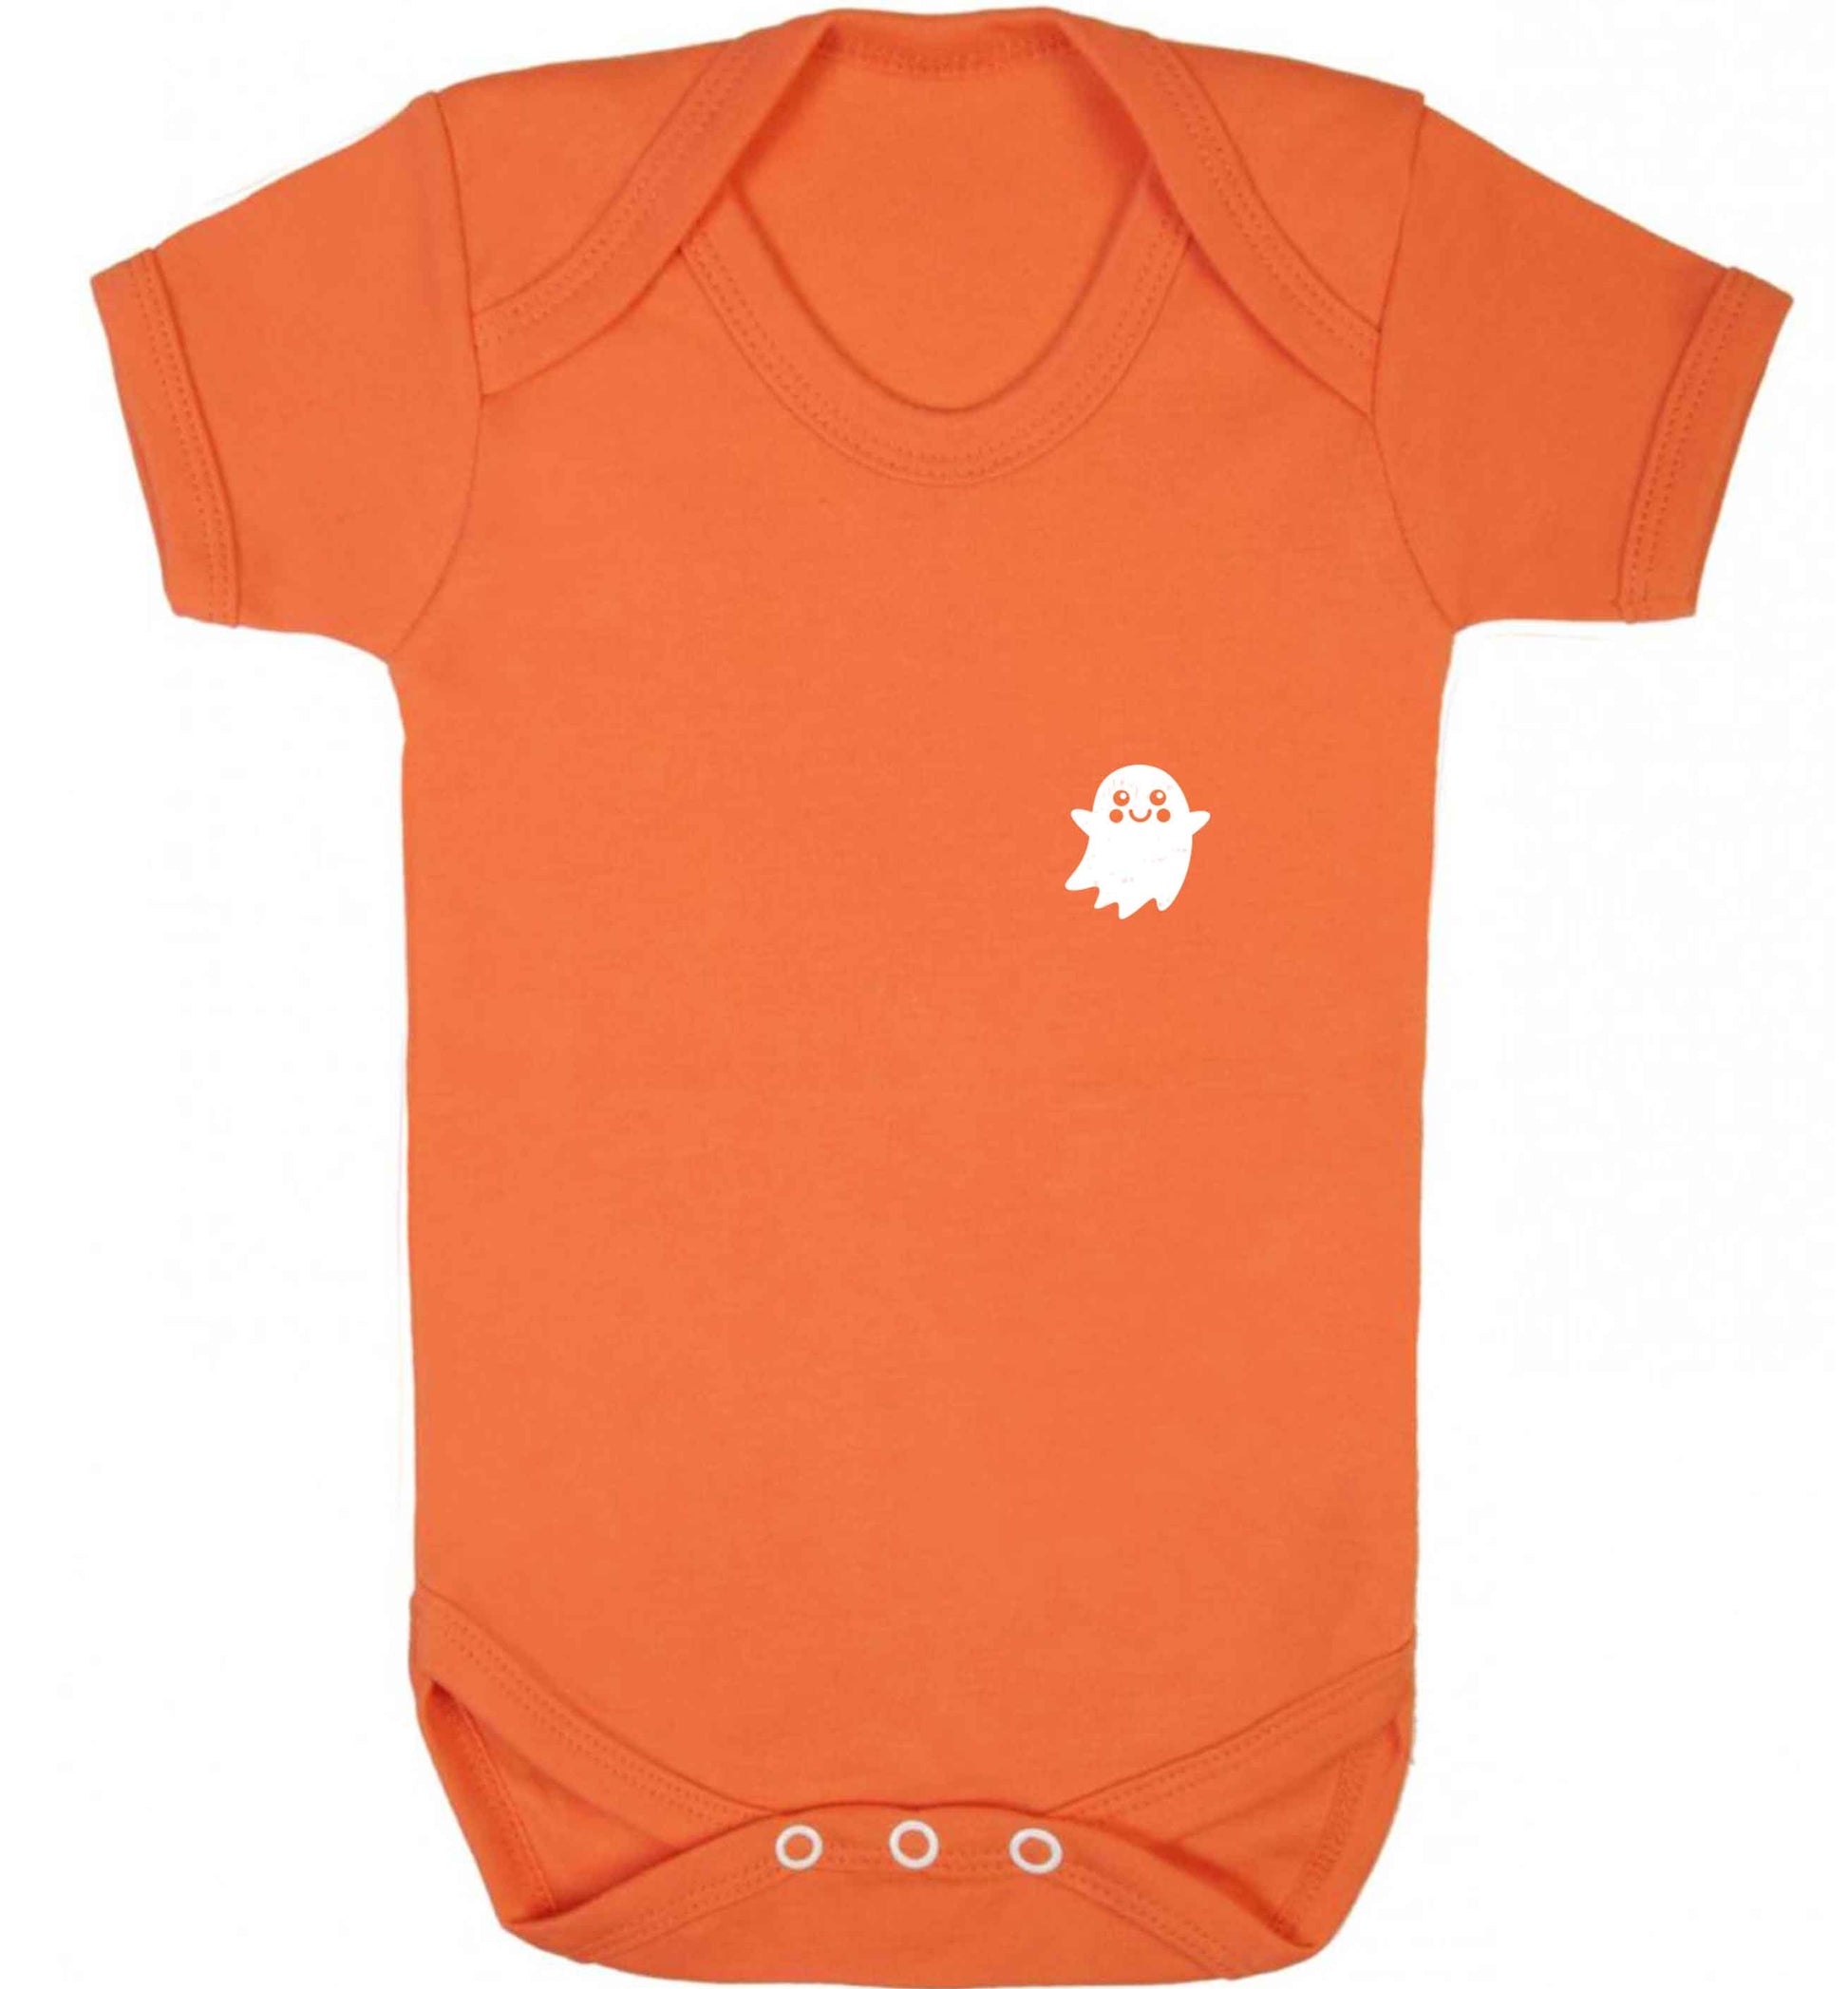 Pocket ghost baby vest orange 18-24 months